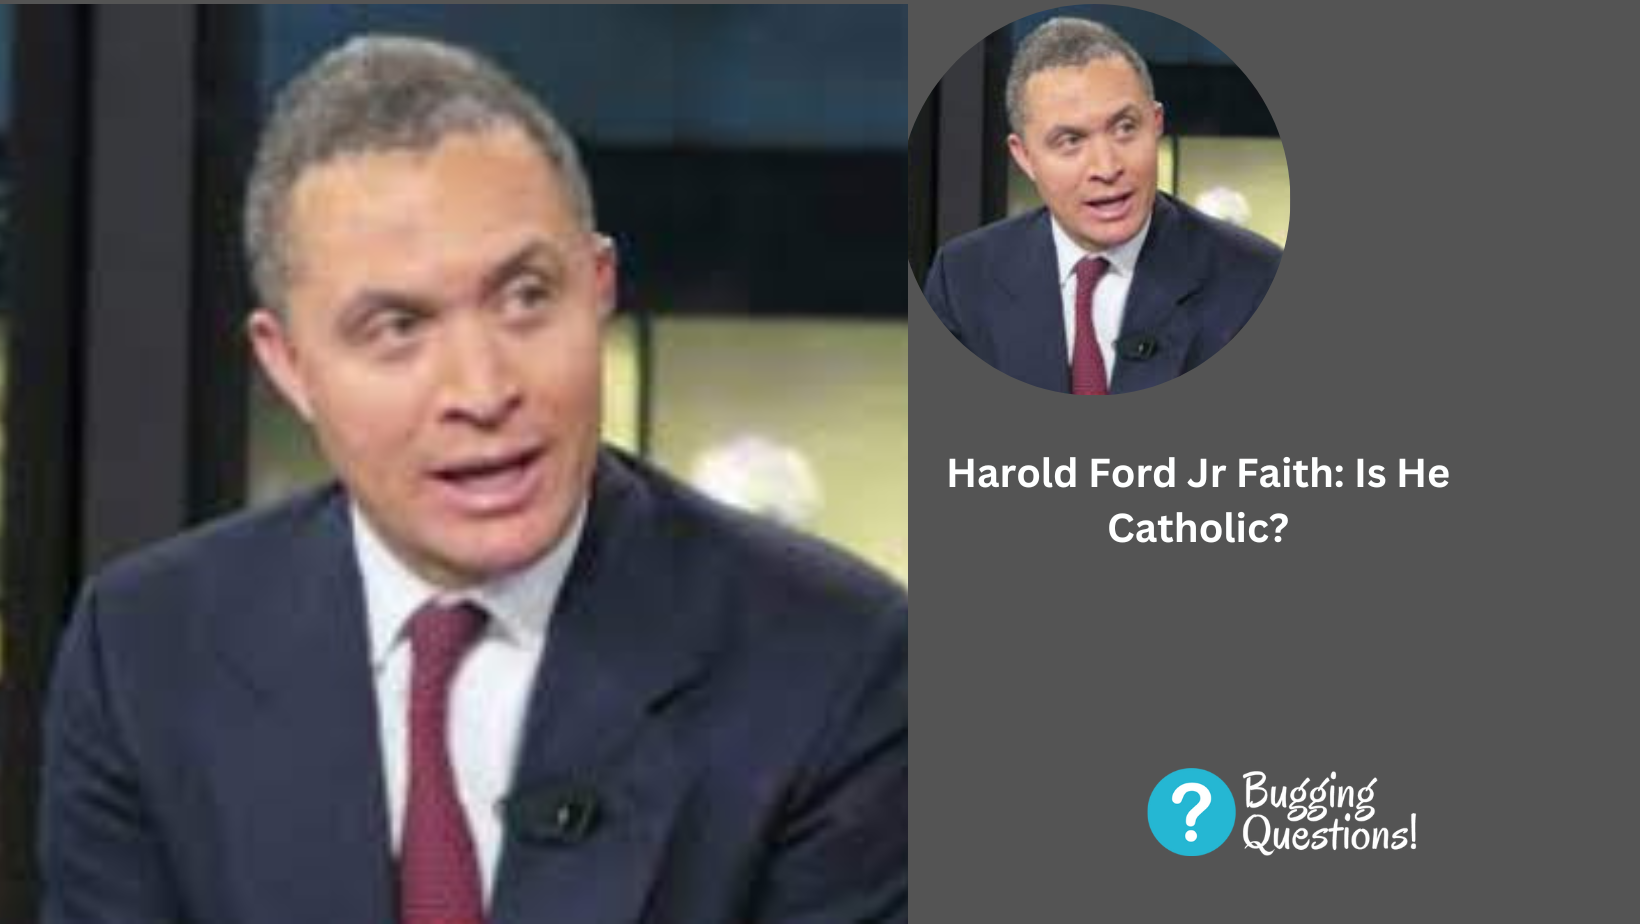 Harold Ford Jr Faith: Is He Catholic?